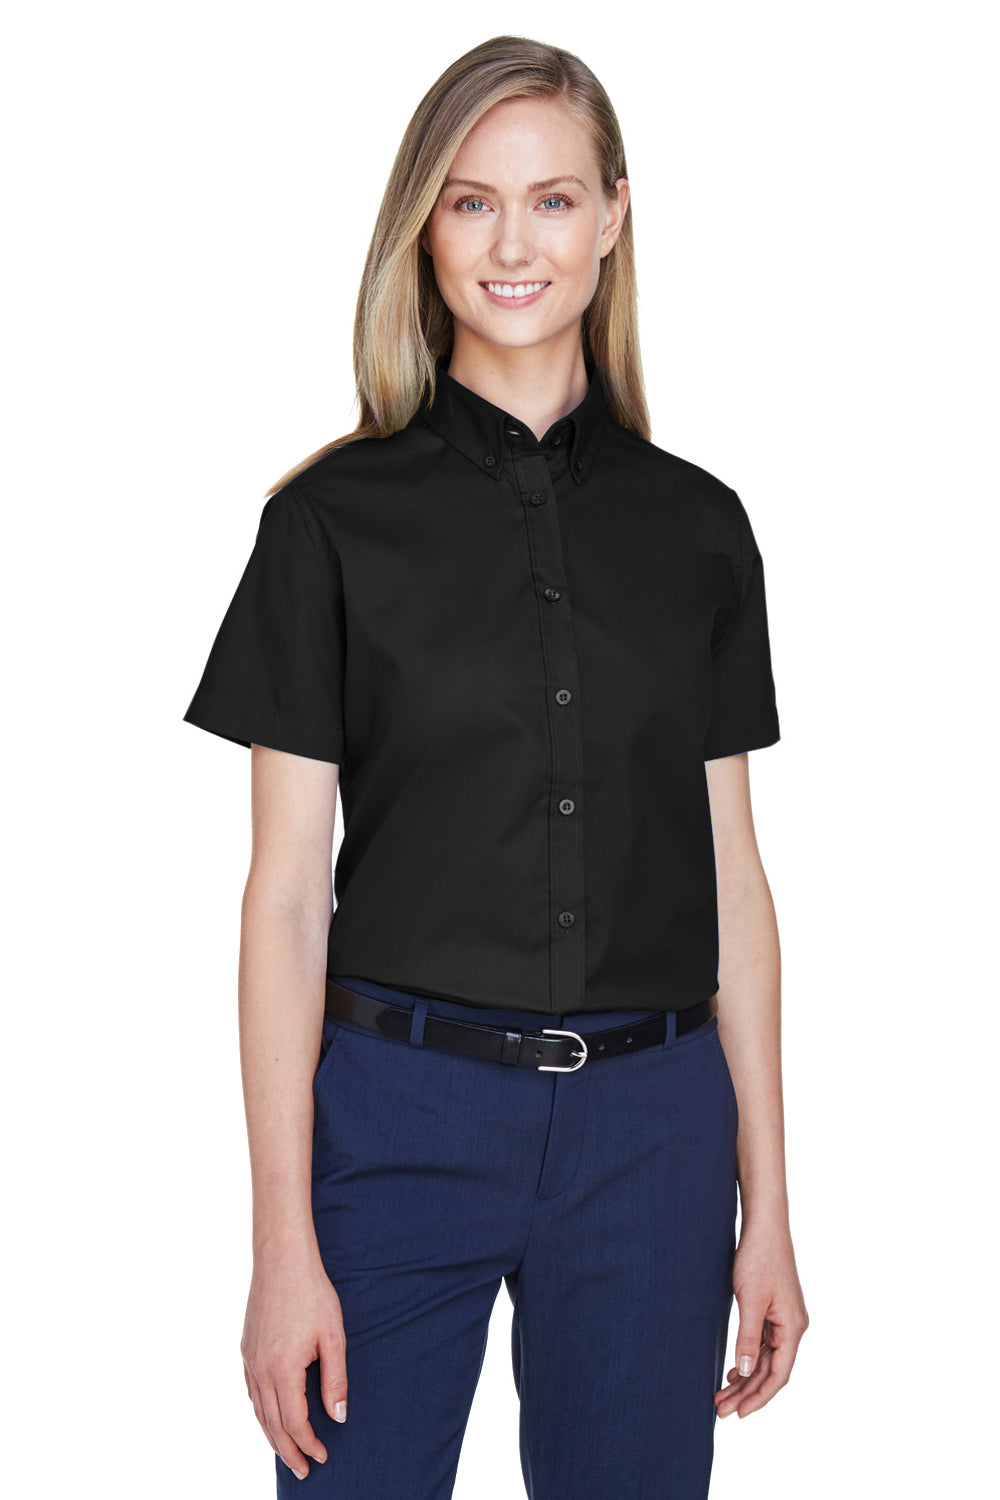 Core 365 78194 Womens Optimum Short Sleeve Button Down Shirt Black Front